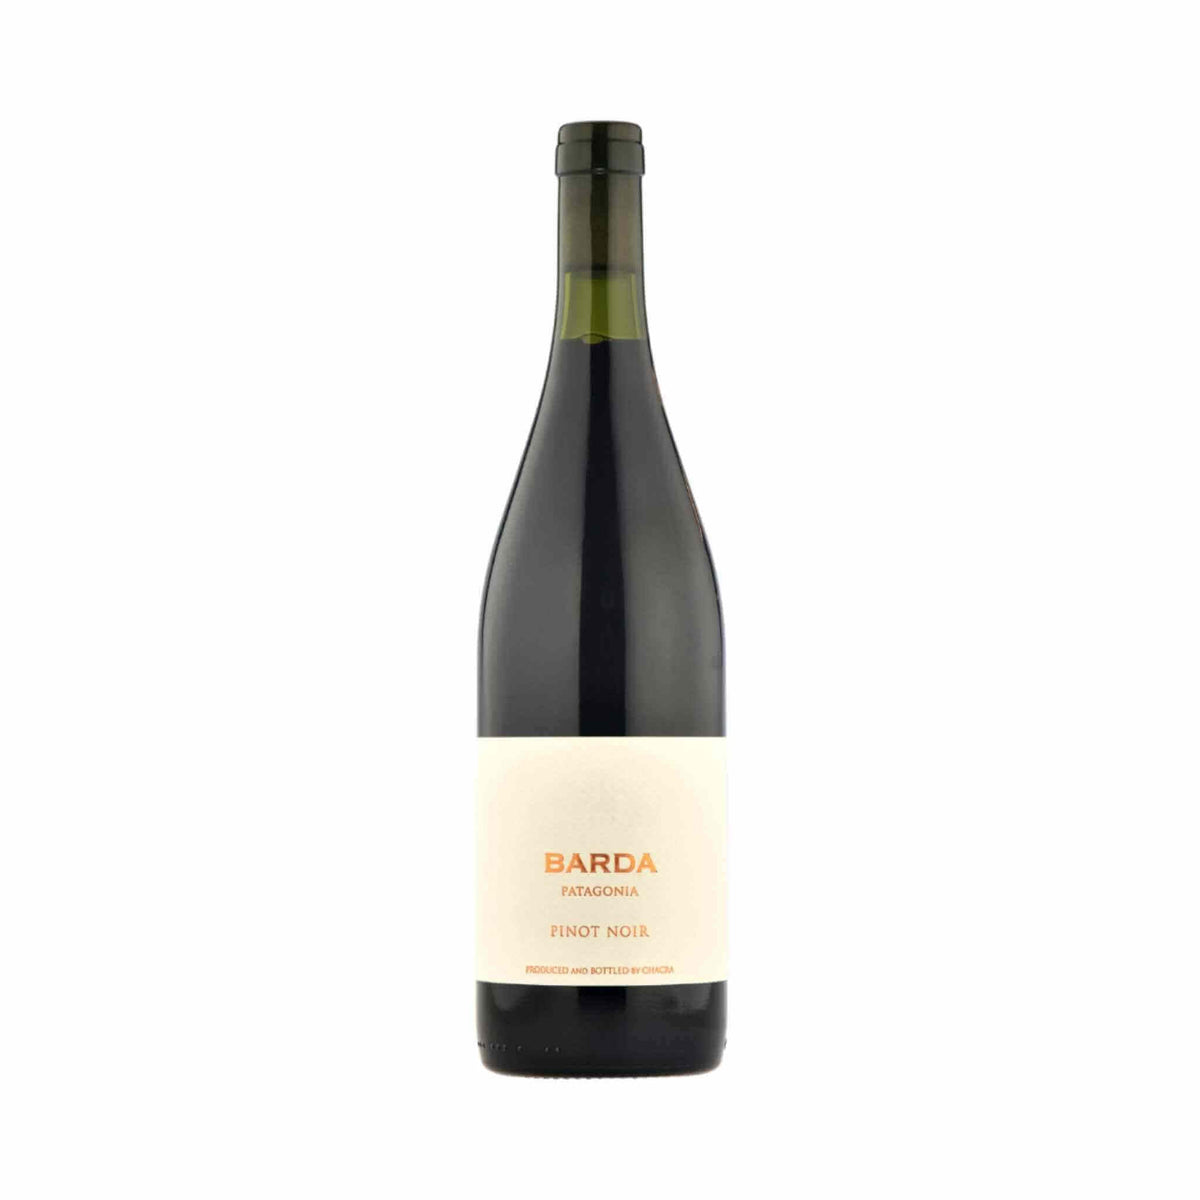 Chacra-Rotwein-Pinot Noir-2021 Pinot Noir Barda-WINECOM